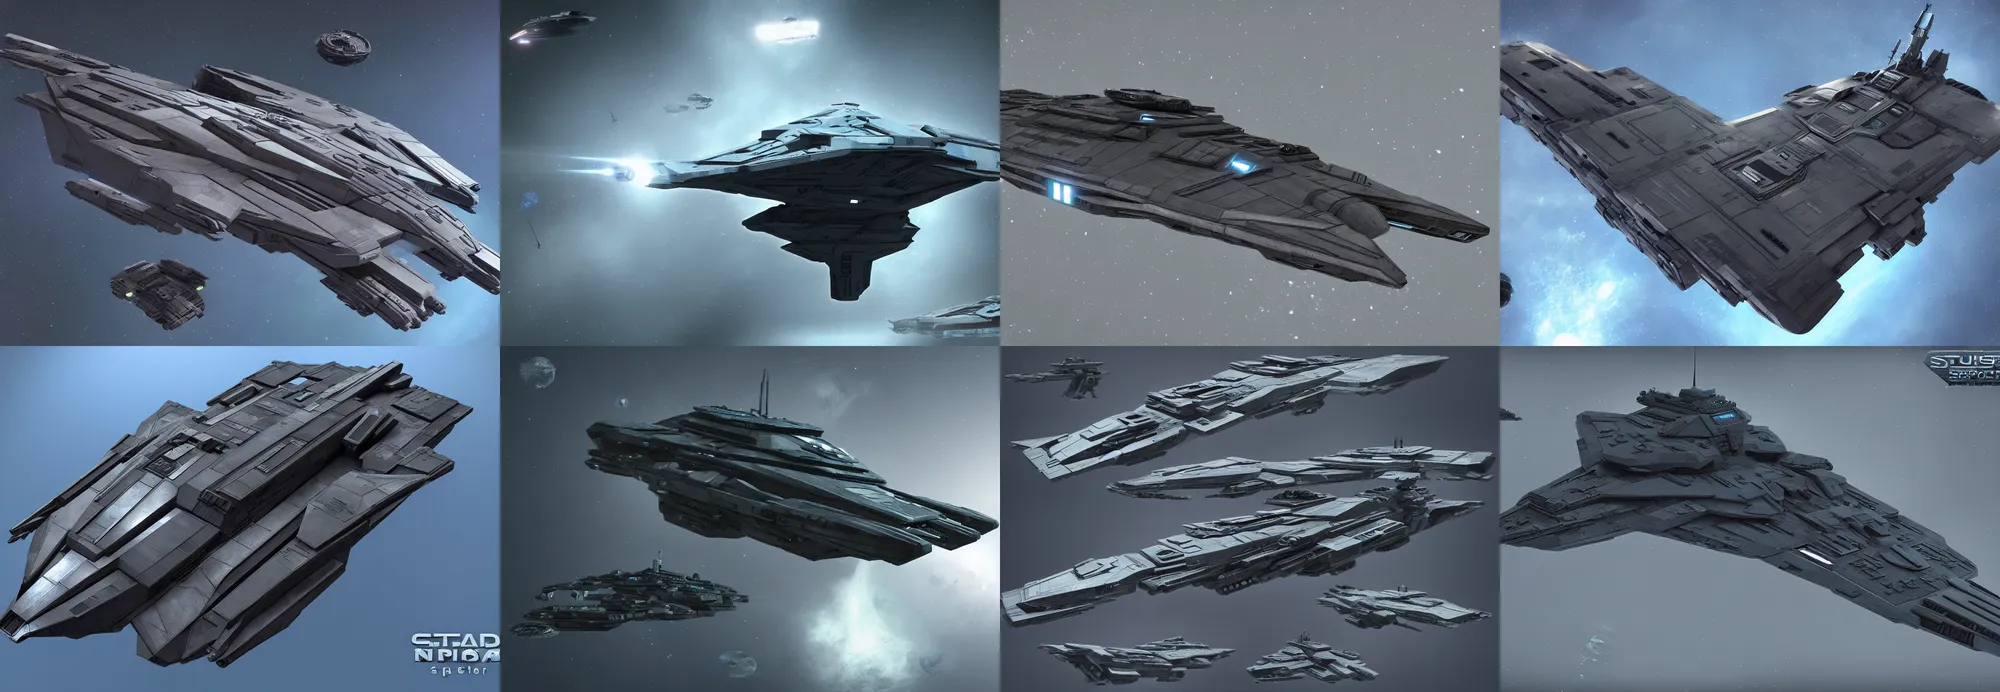 Prompt: a spaceship cruiser battleship inspired by sulaco, star destroyer, ilm, beeple, star citizen halo, mass effect, starship troopers, elysium